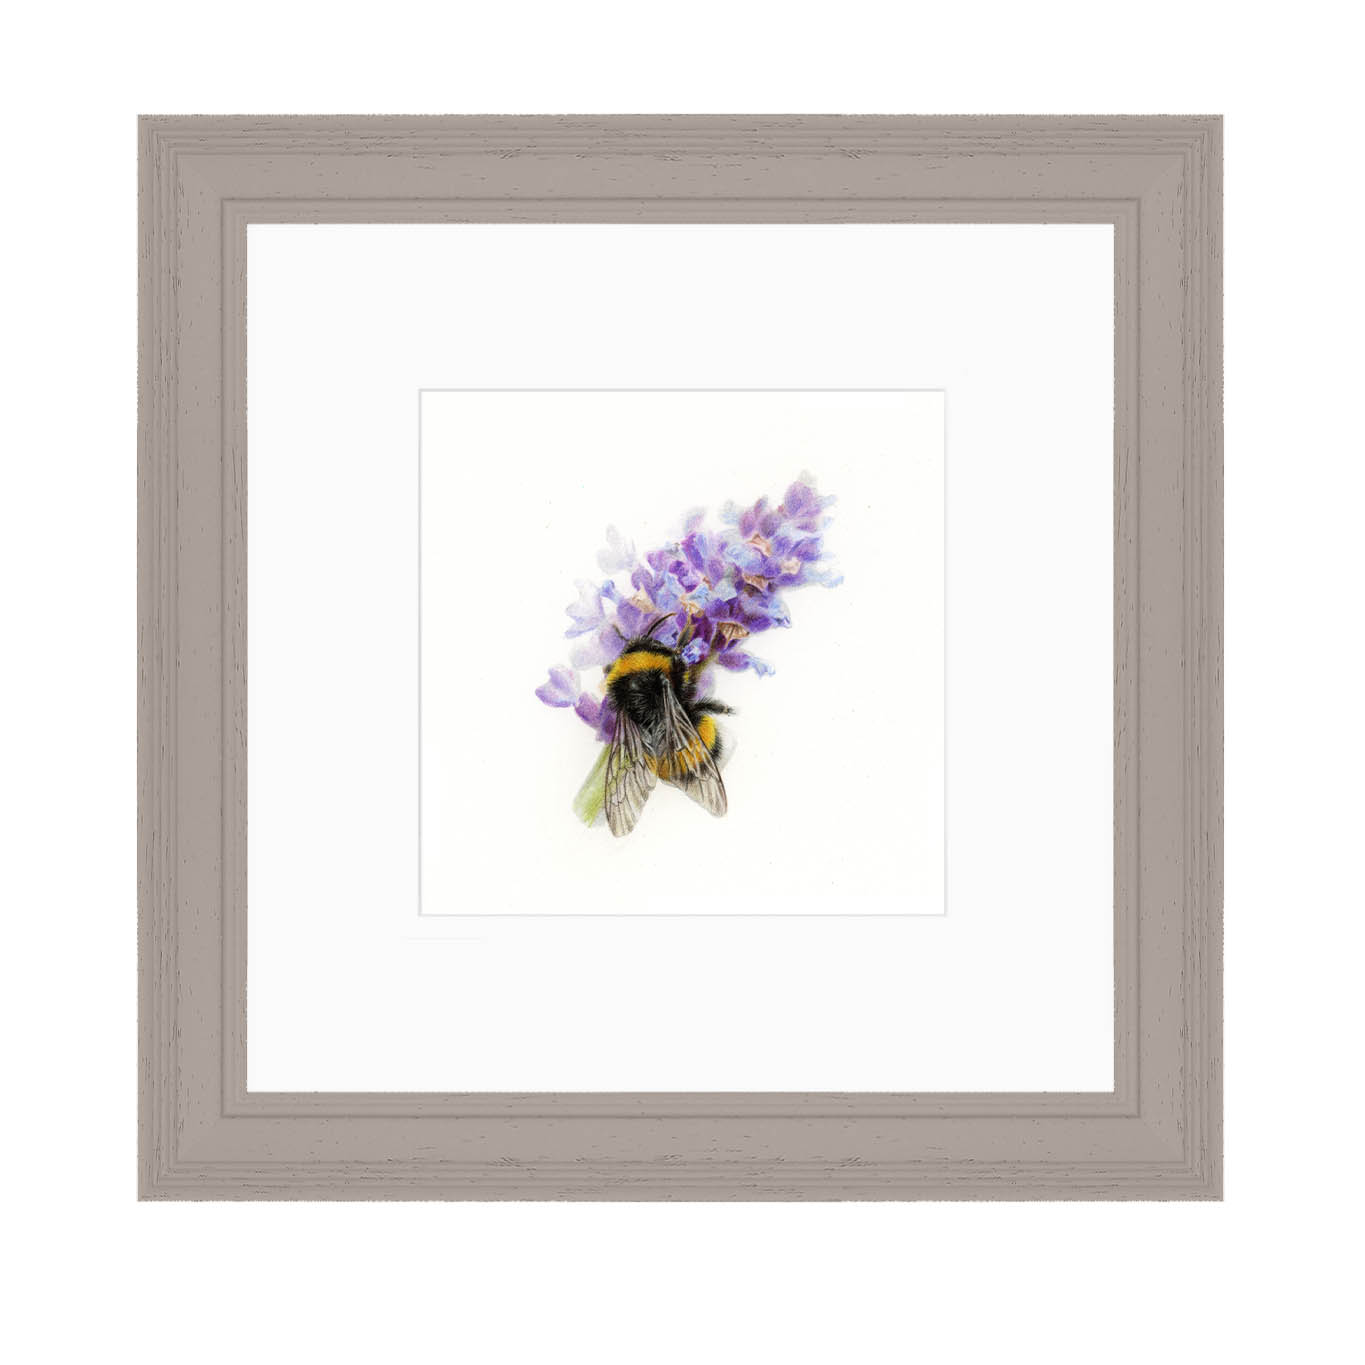 Bumblebee on Lavender